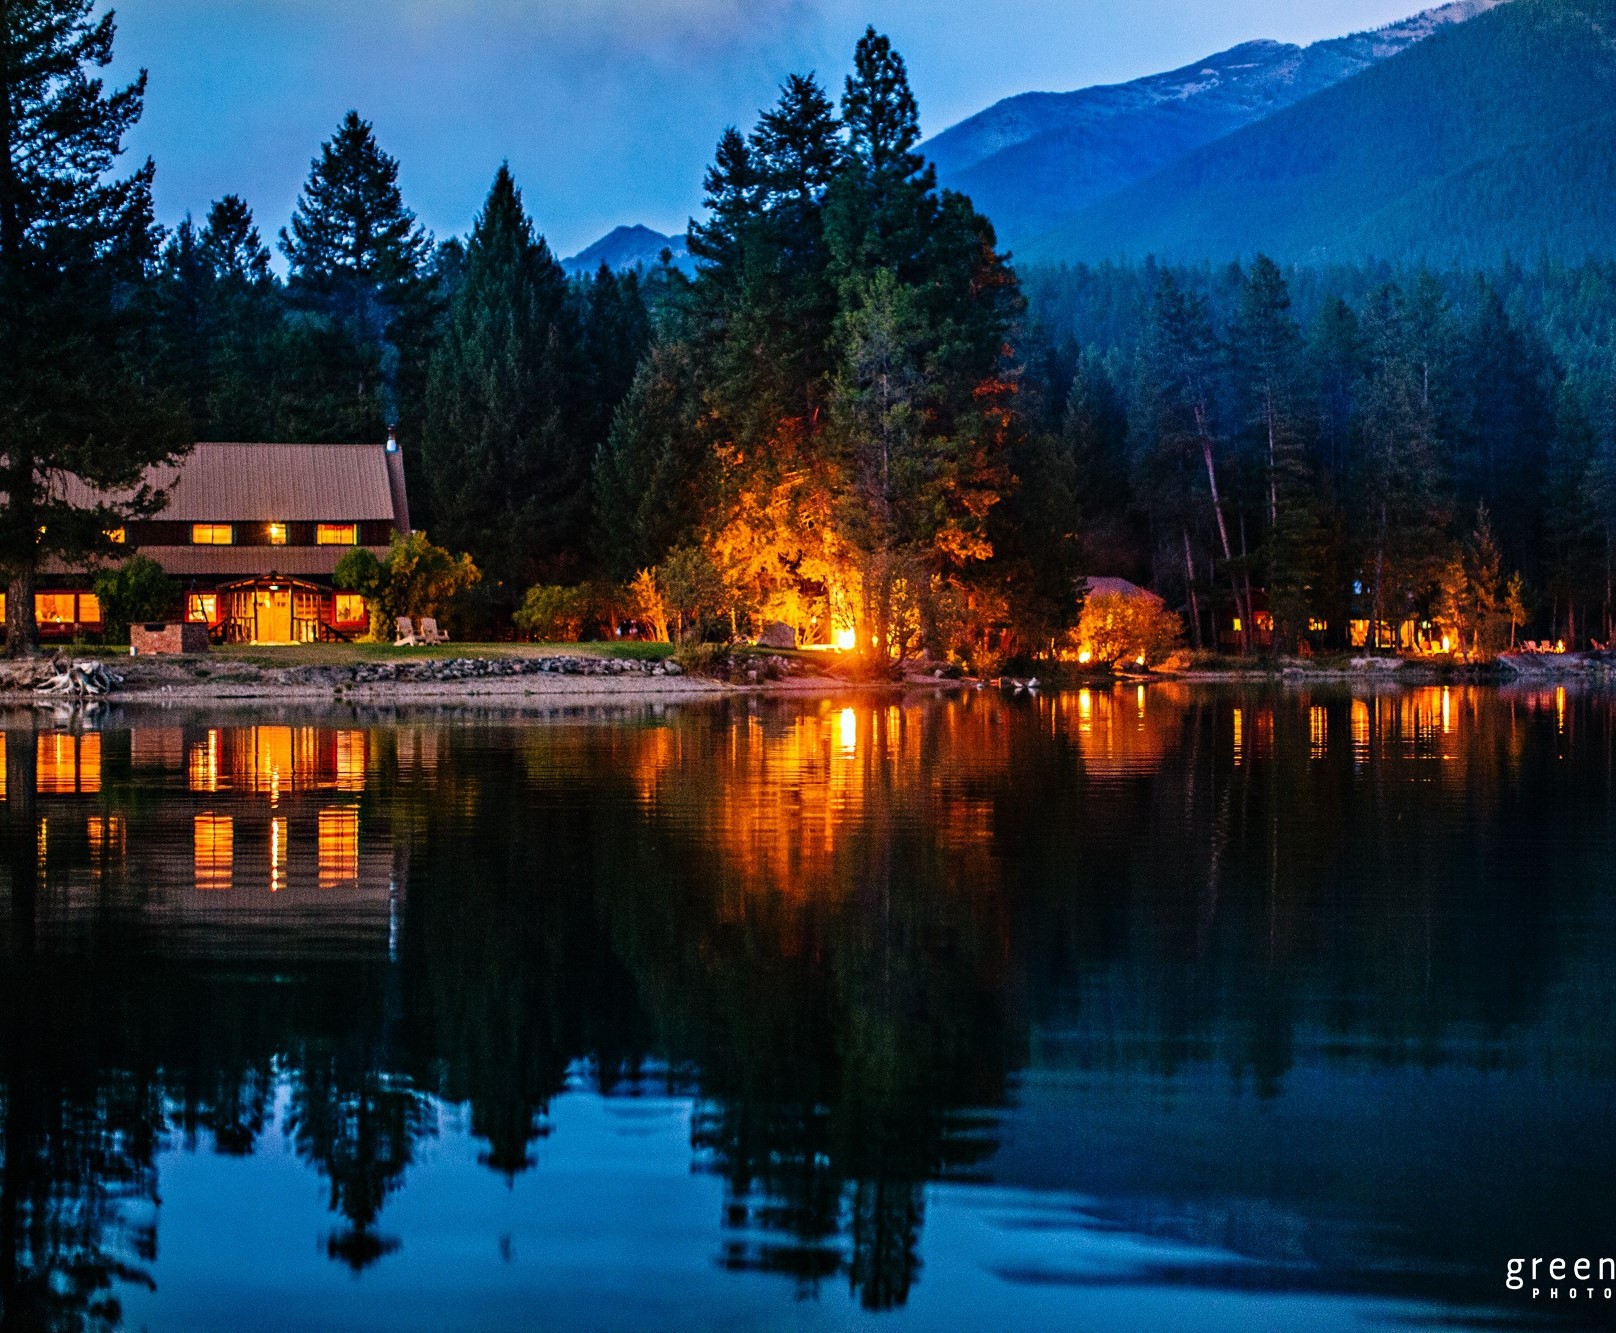 Holland Lake Lodge